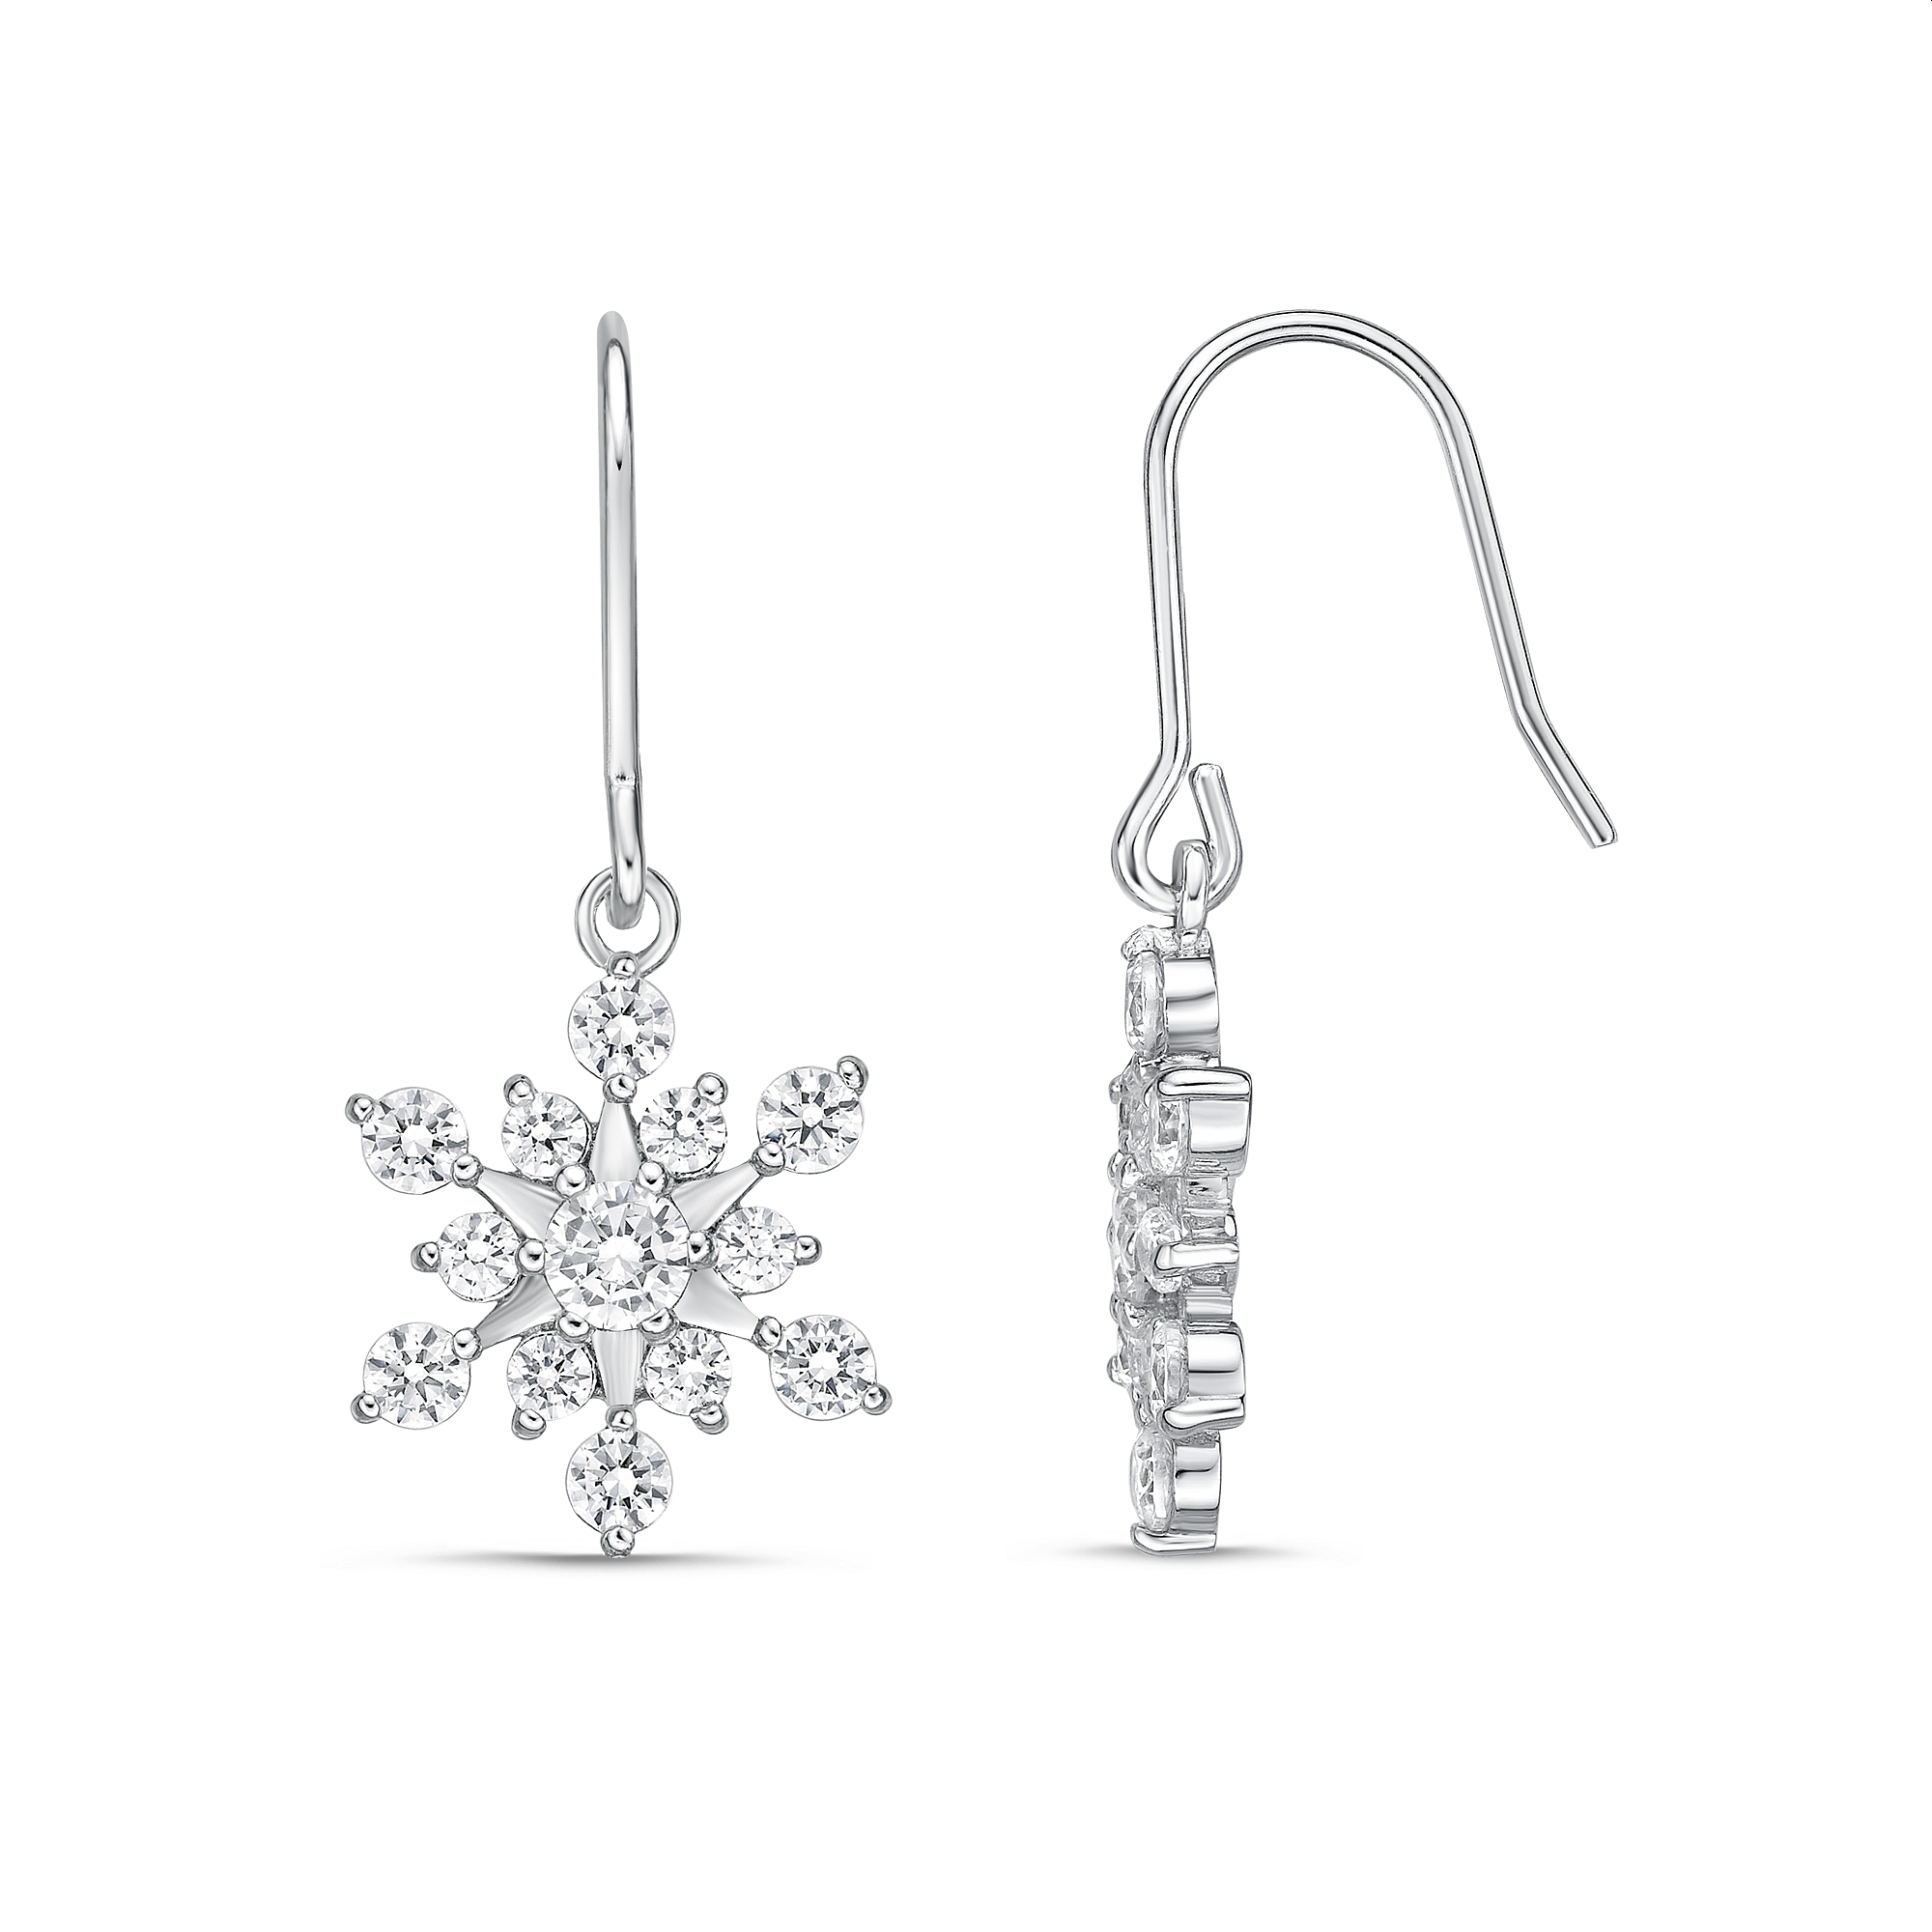 Lavari Jewelers Women’s Flurry Snowflake Dangle Earrings with Fish Hook, 925 Sterling Silver, Cubic Zirconia